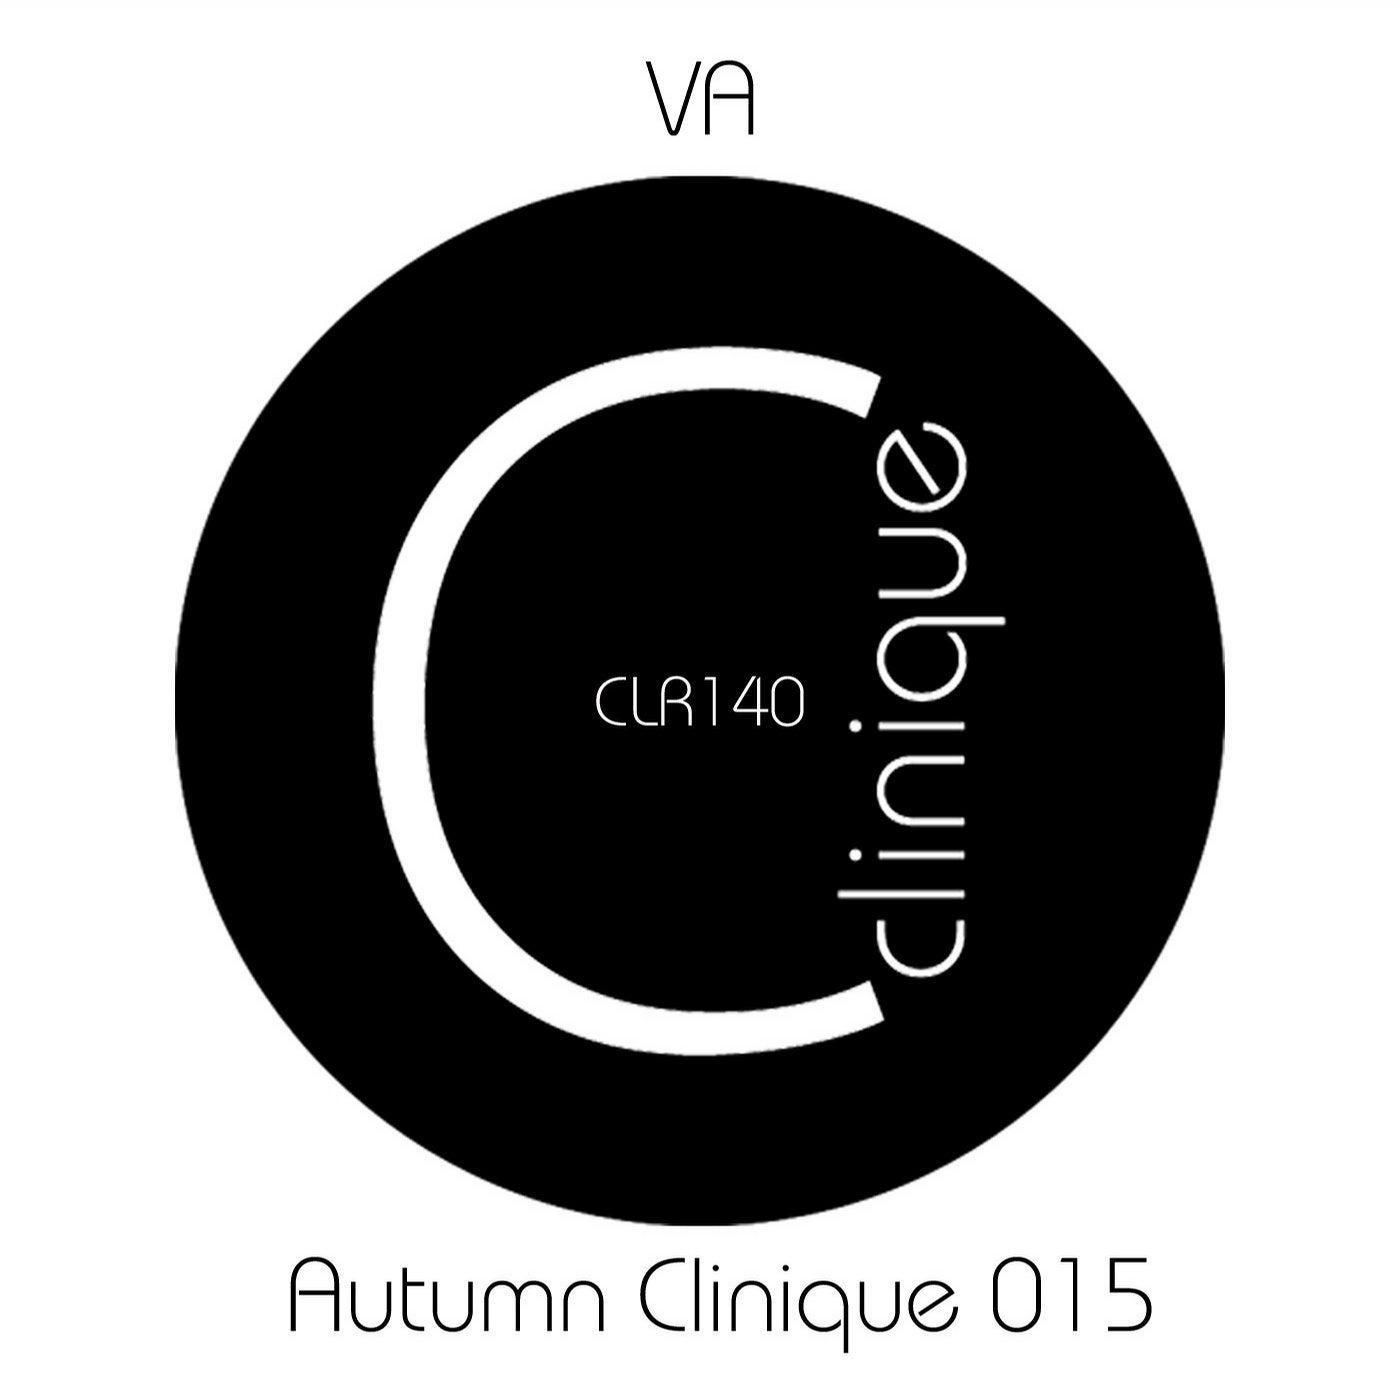 Autumn Clinique 015